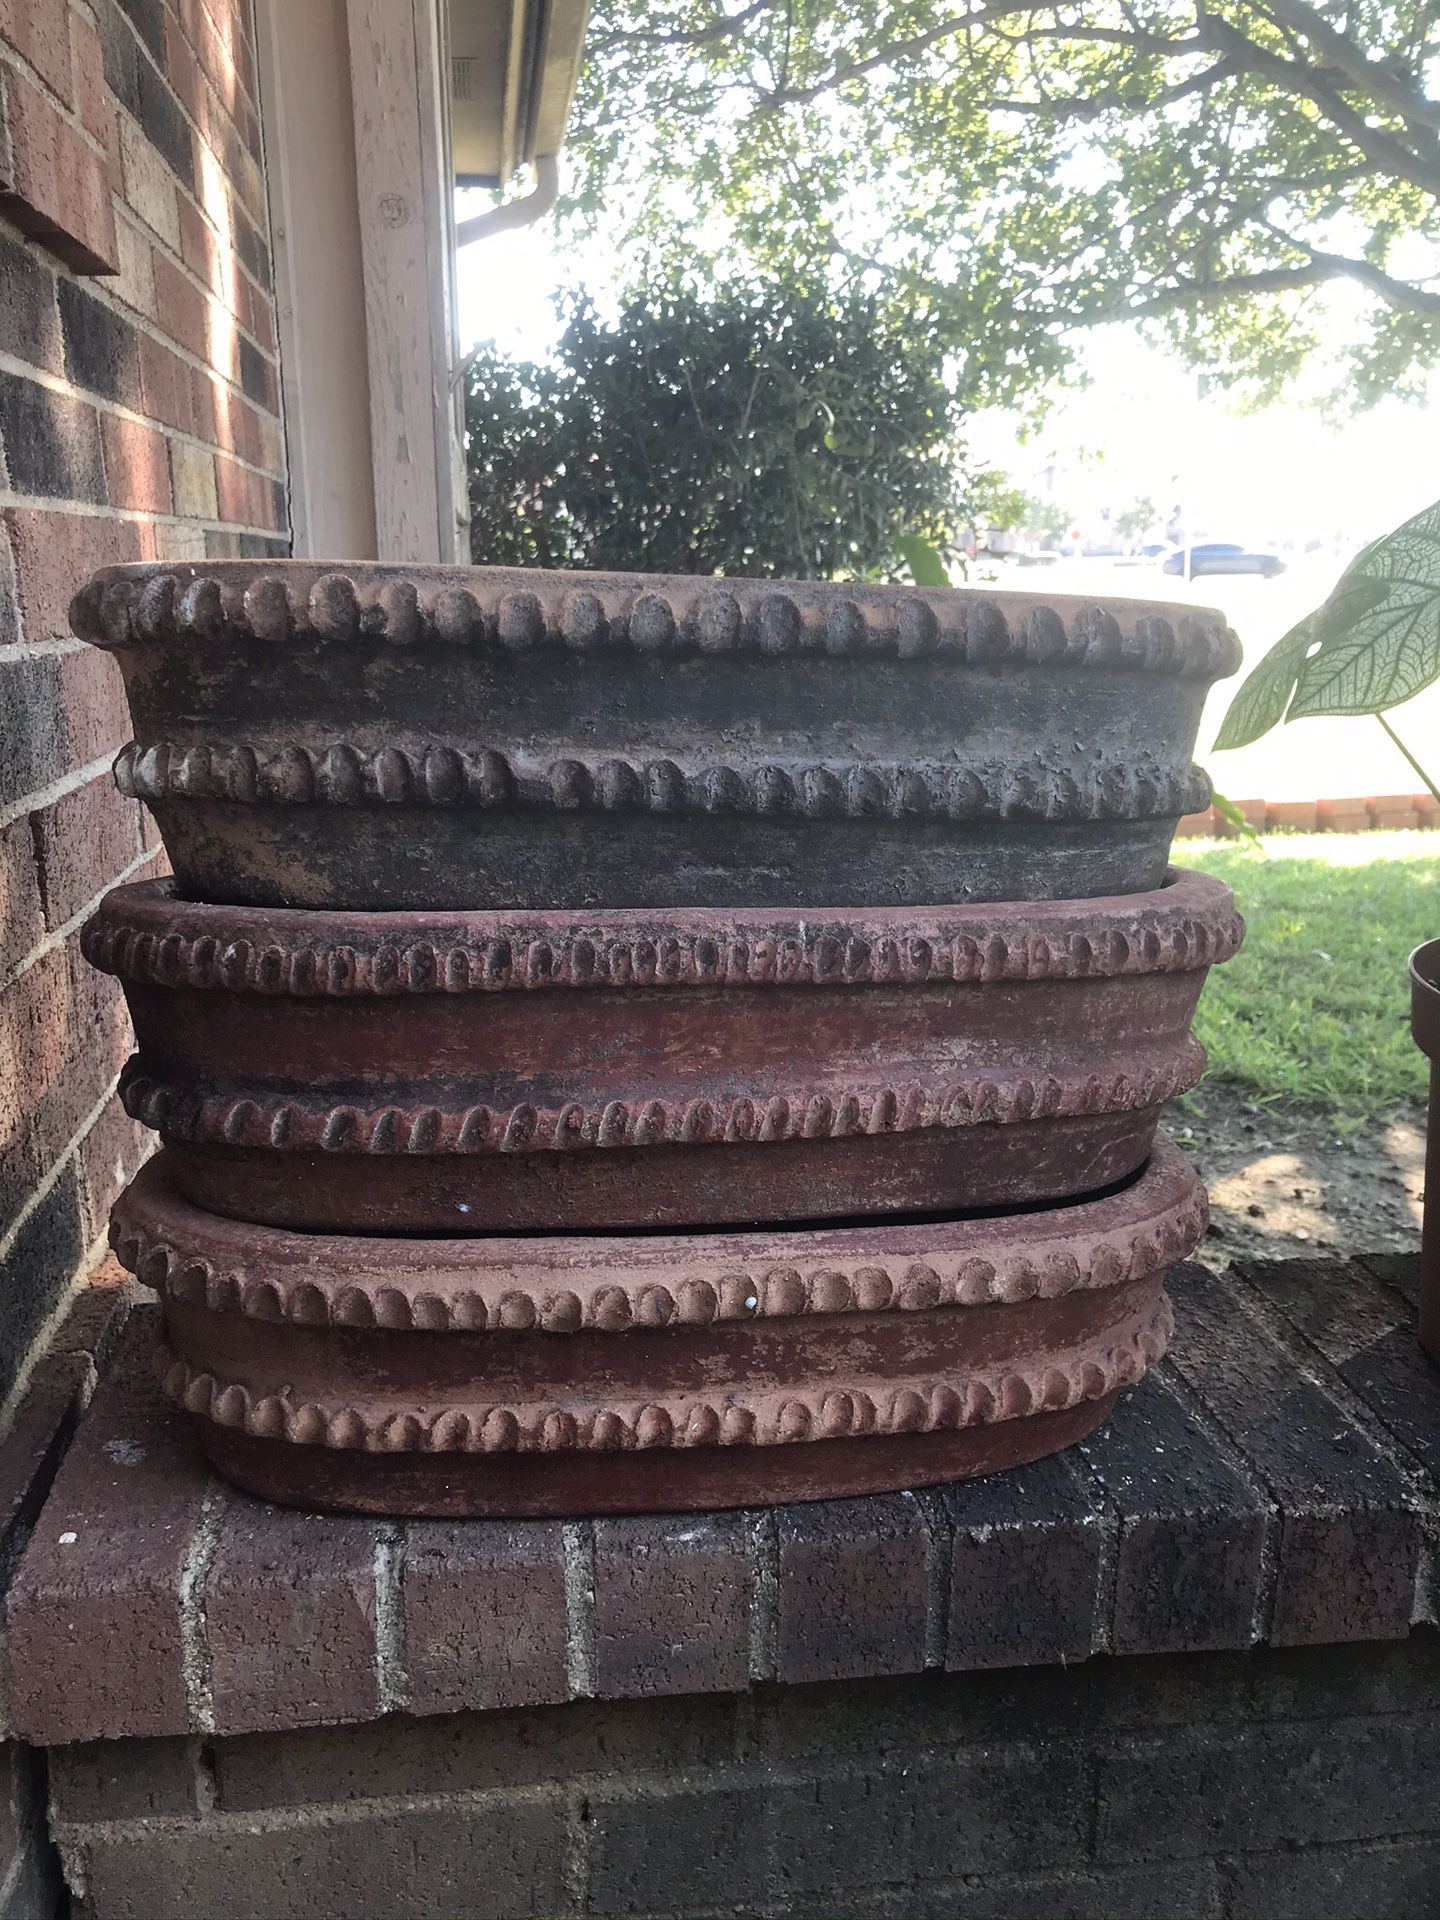 Clay plant pots